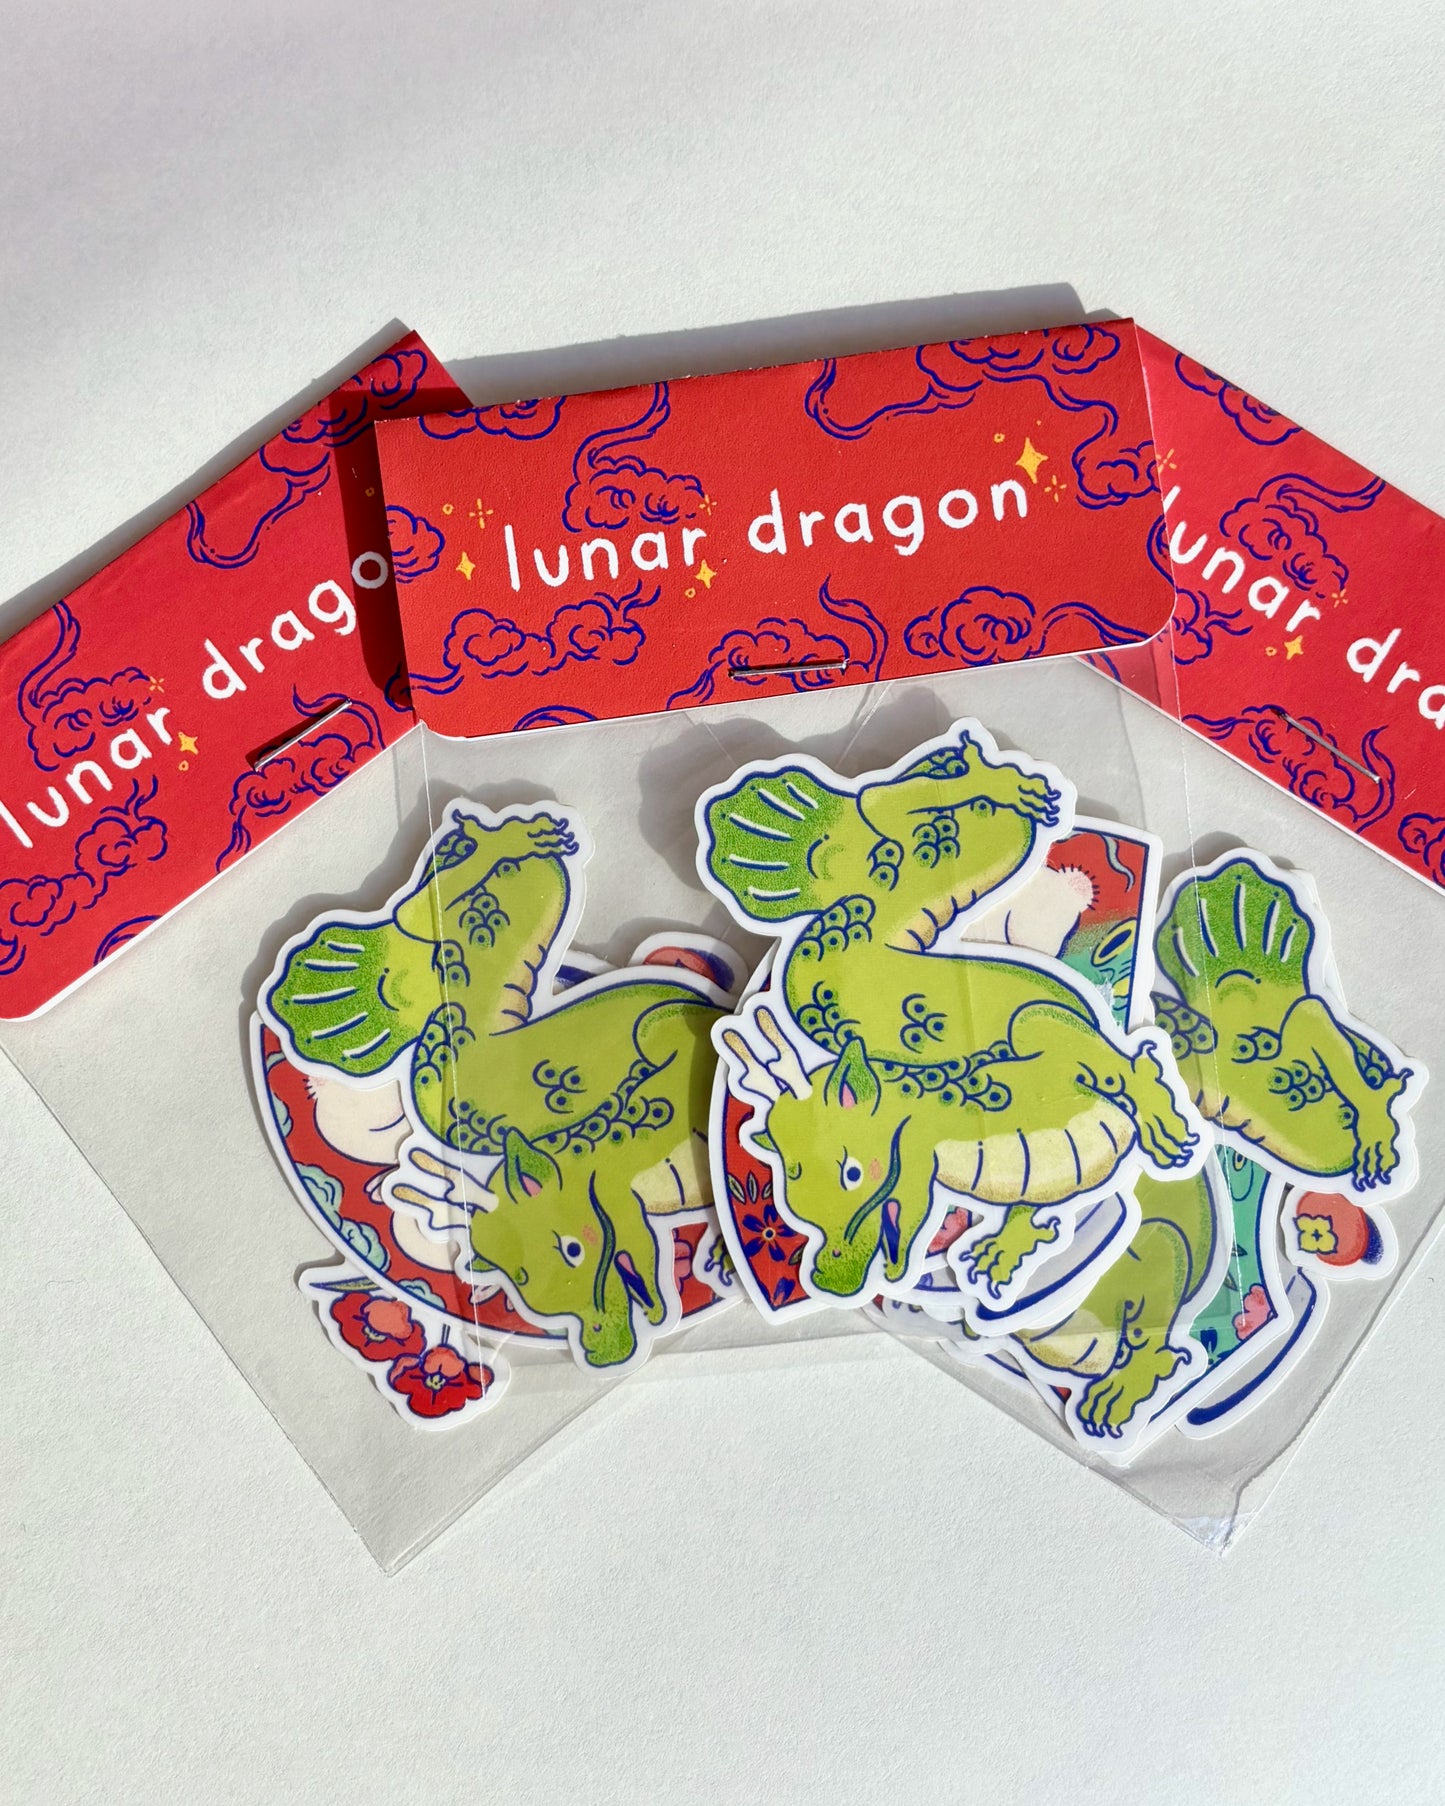 Lunar Dragon Sticker Pack